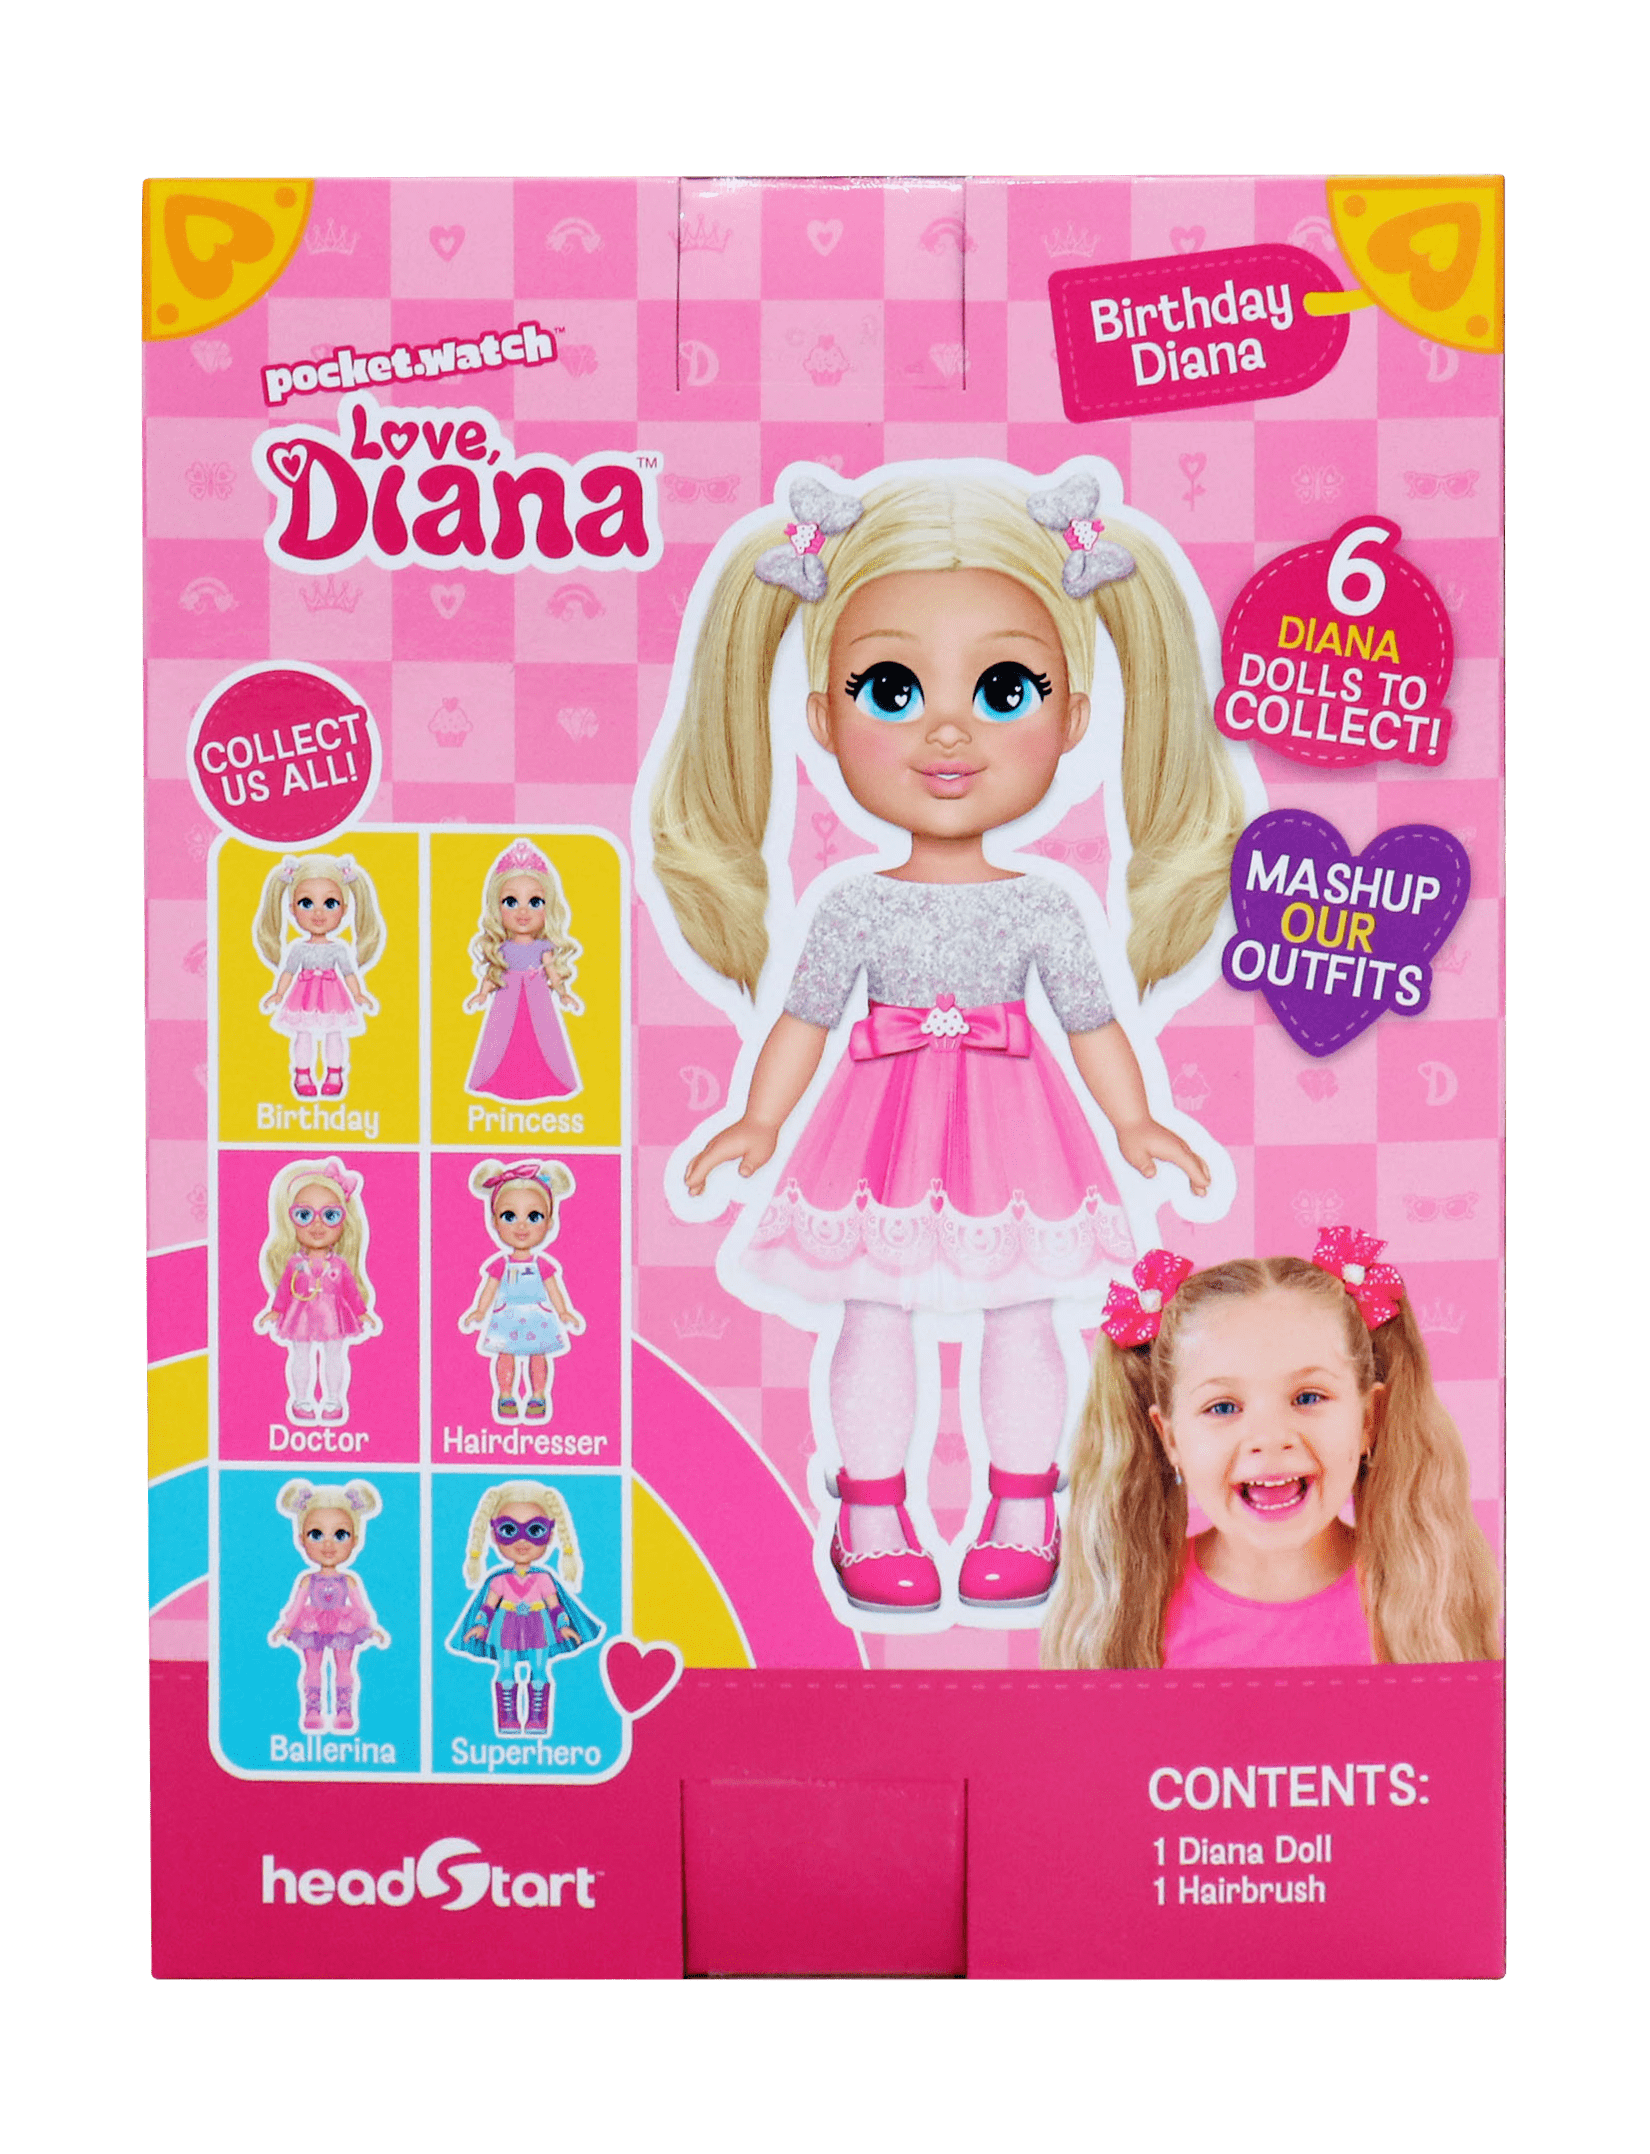 LOVE DIANA Mashups Birthday Diana 6" Doll & Brush PocketWatch 